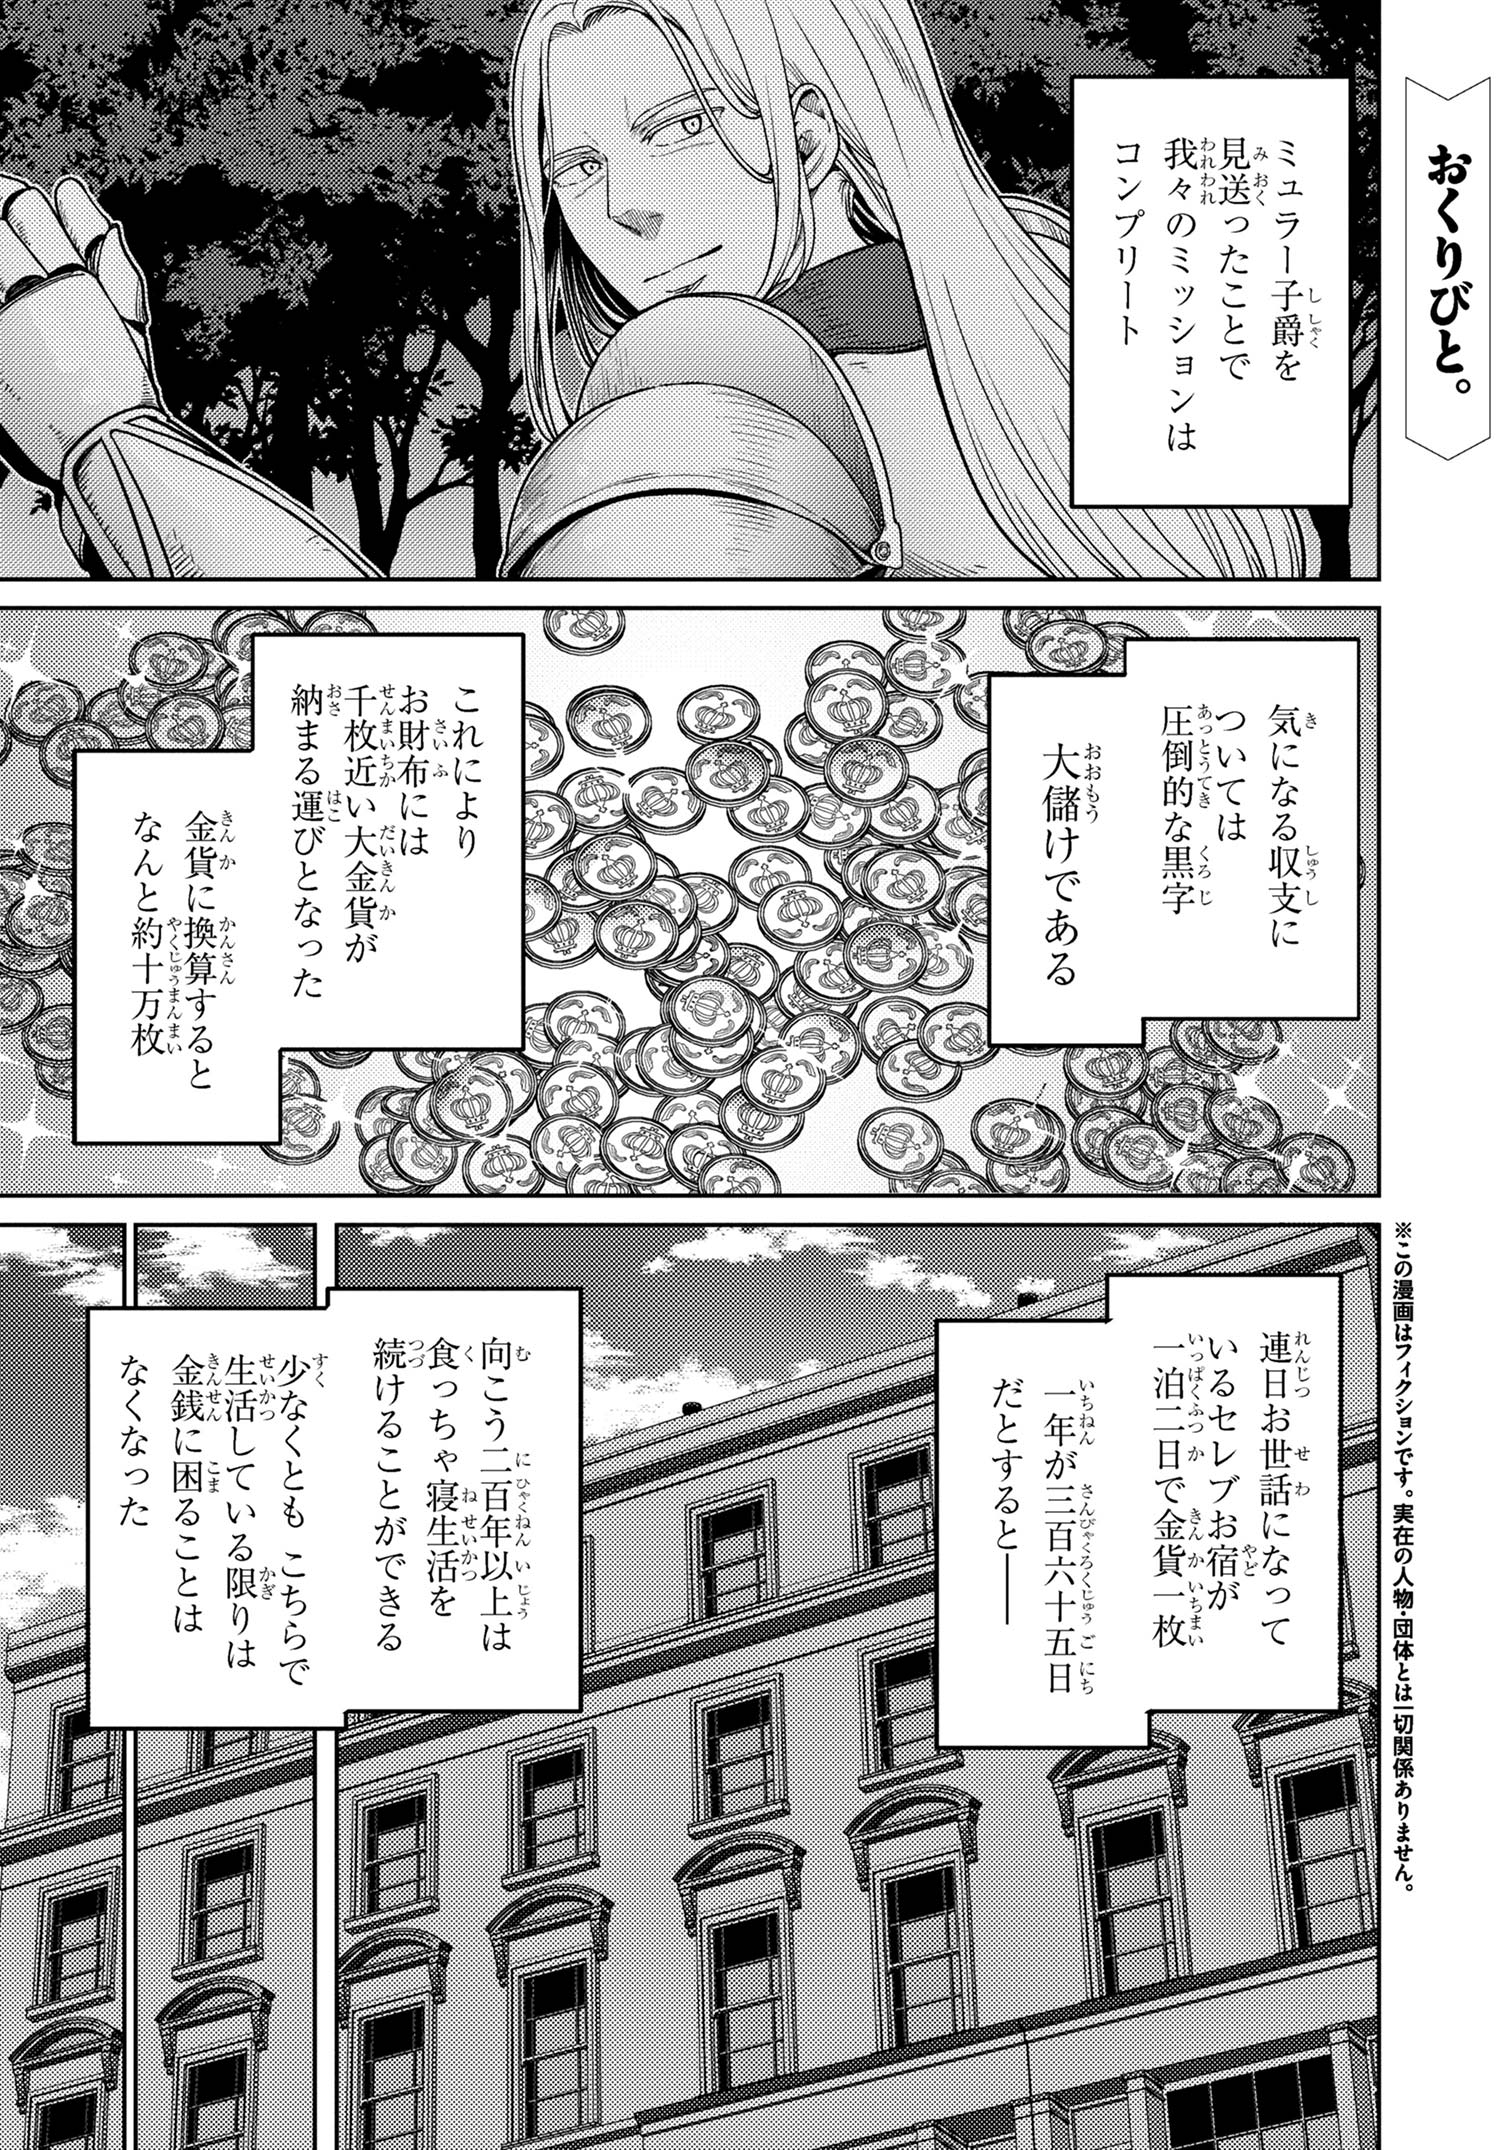 Sasaki to Pii-chan - Chapter 16.1 - Page 1